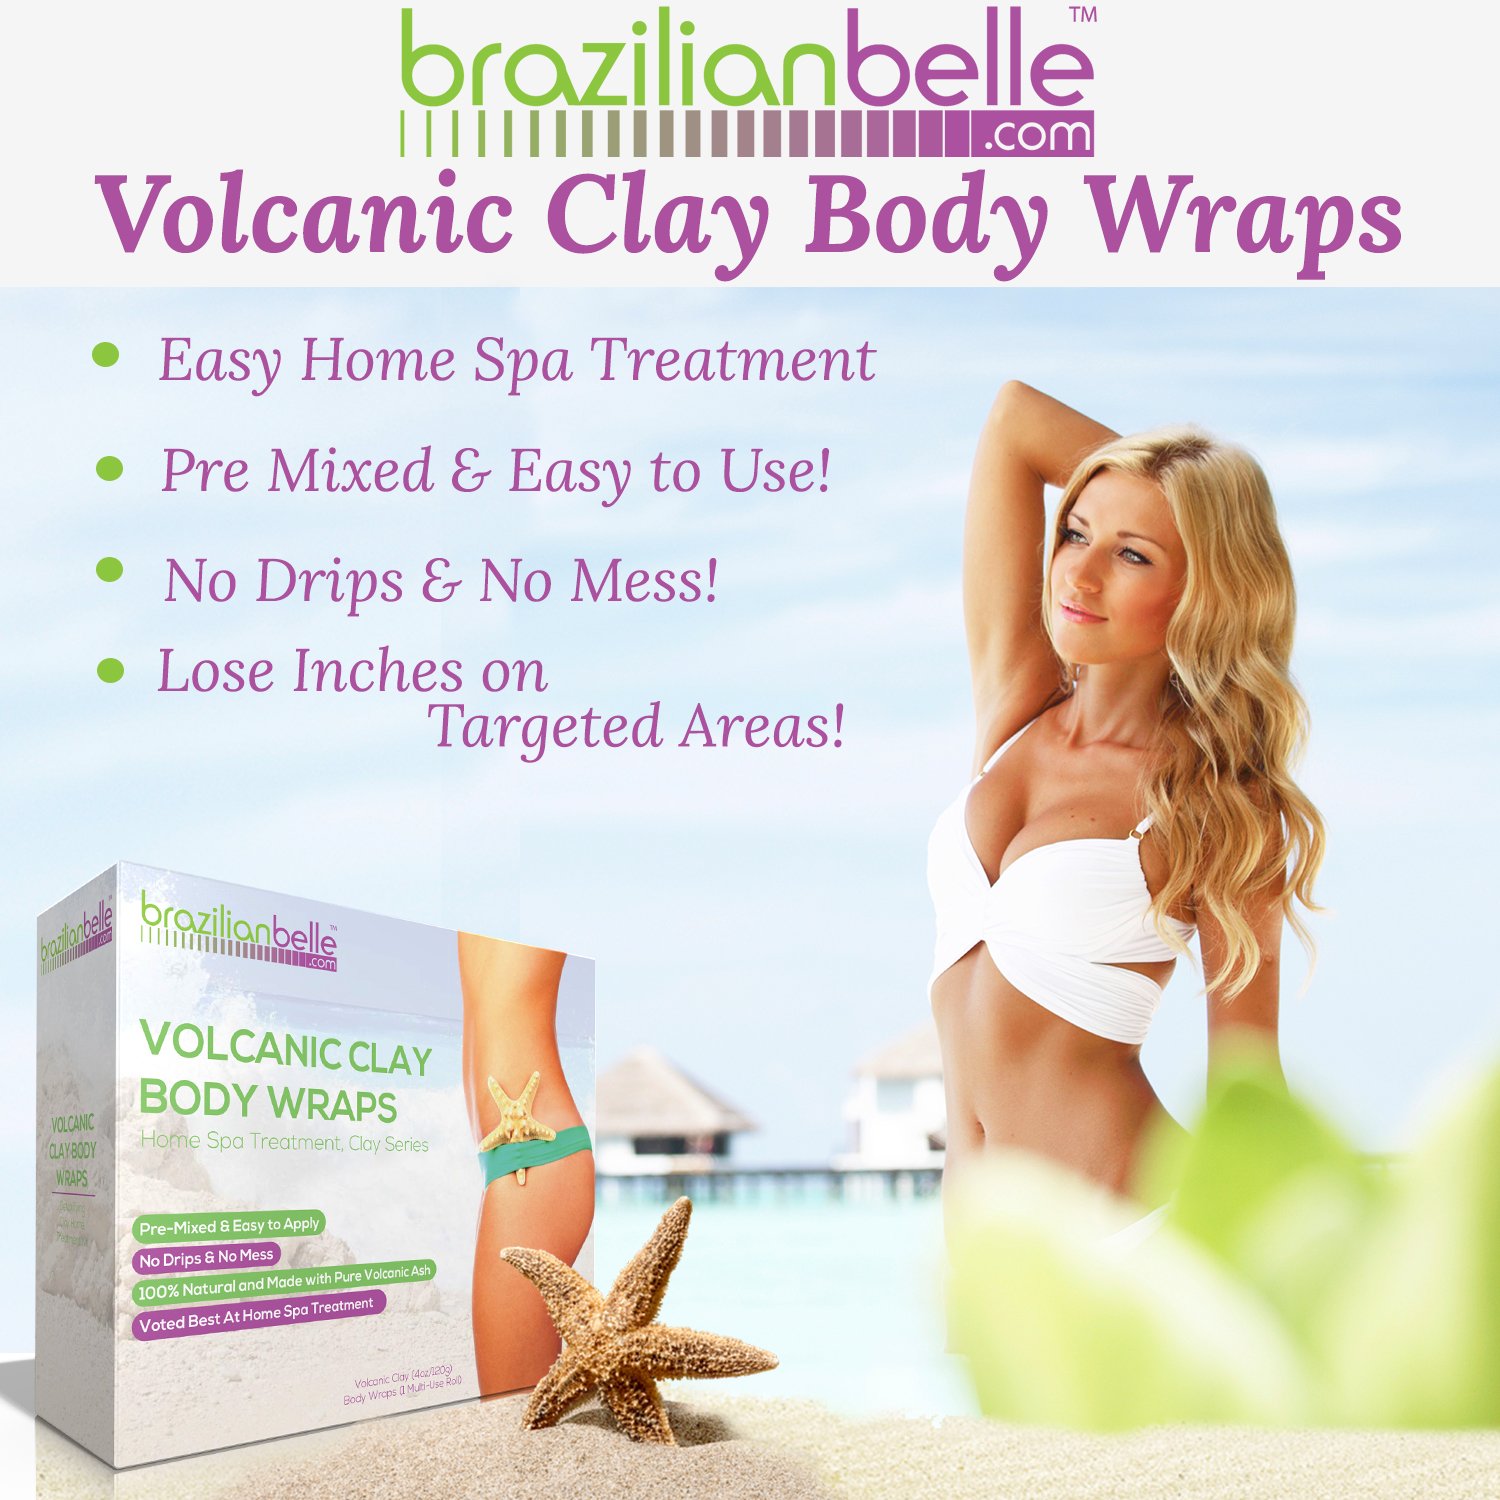 Brazilian Belle Lemontox, Slimming Tea, and Volcanic Clay Body Wrap